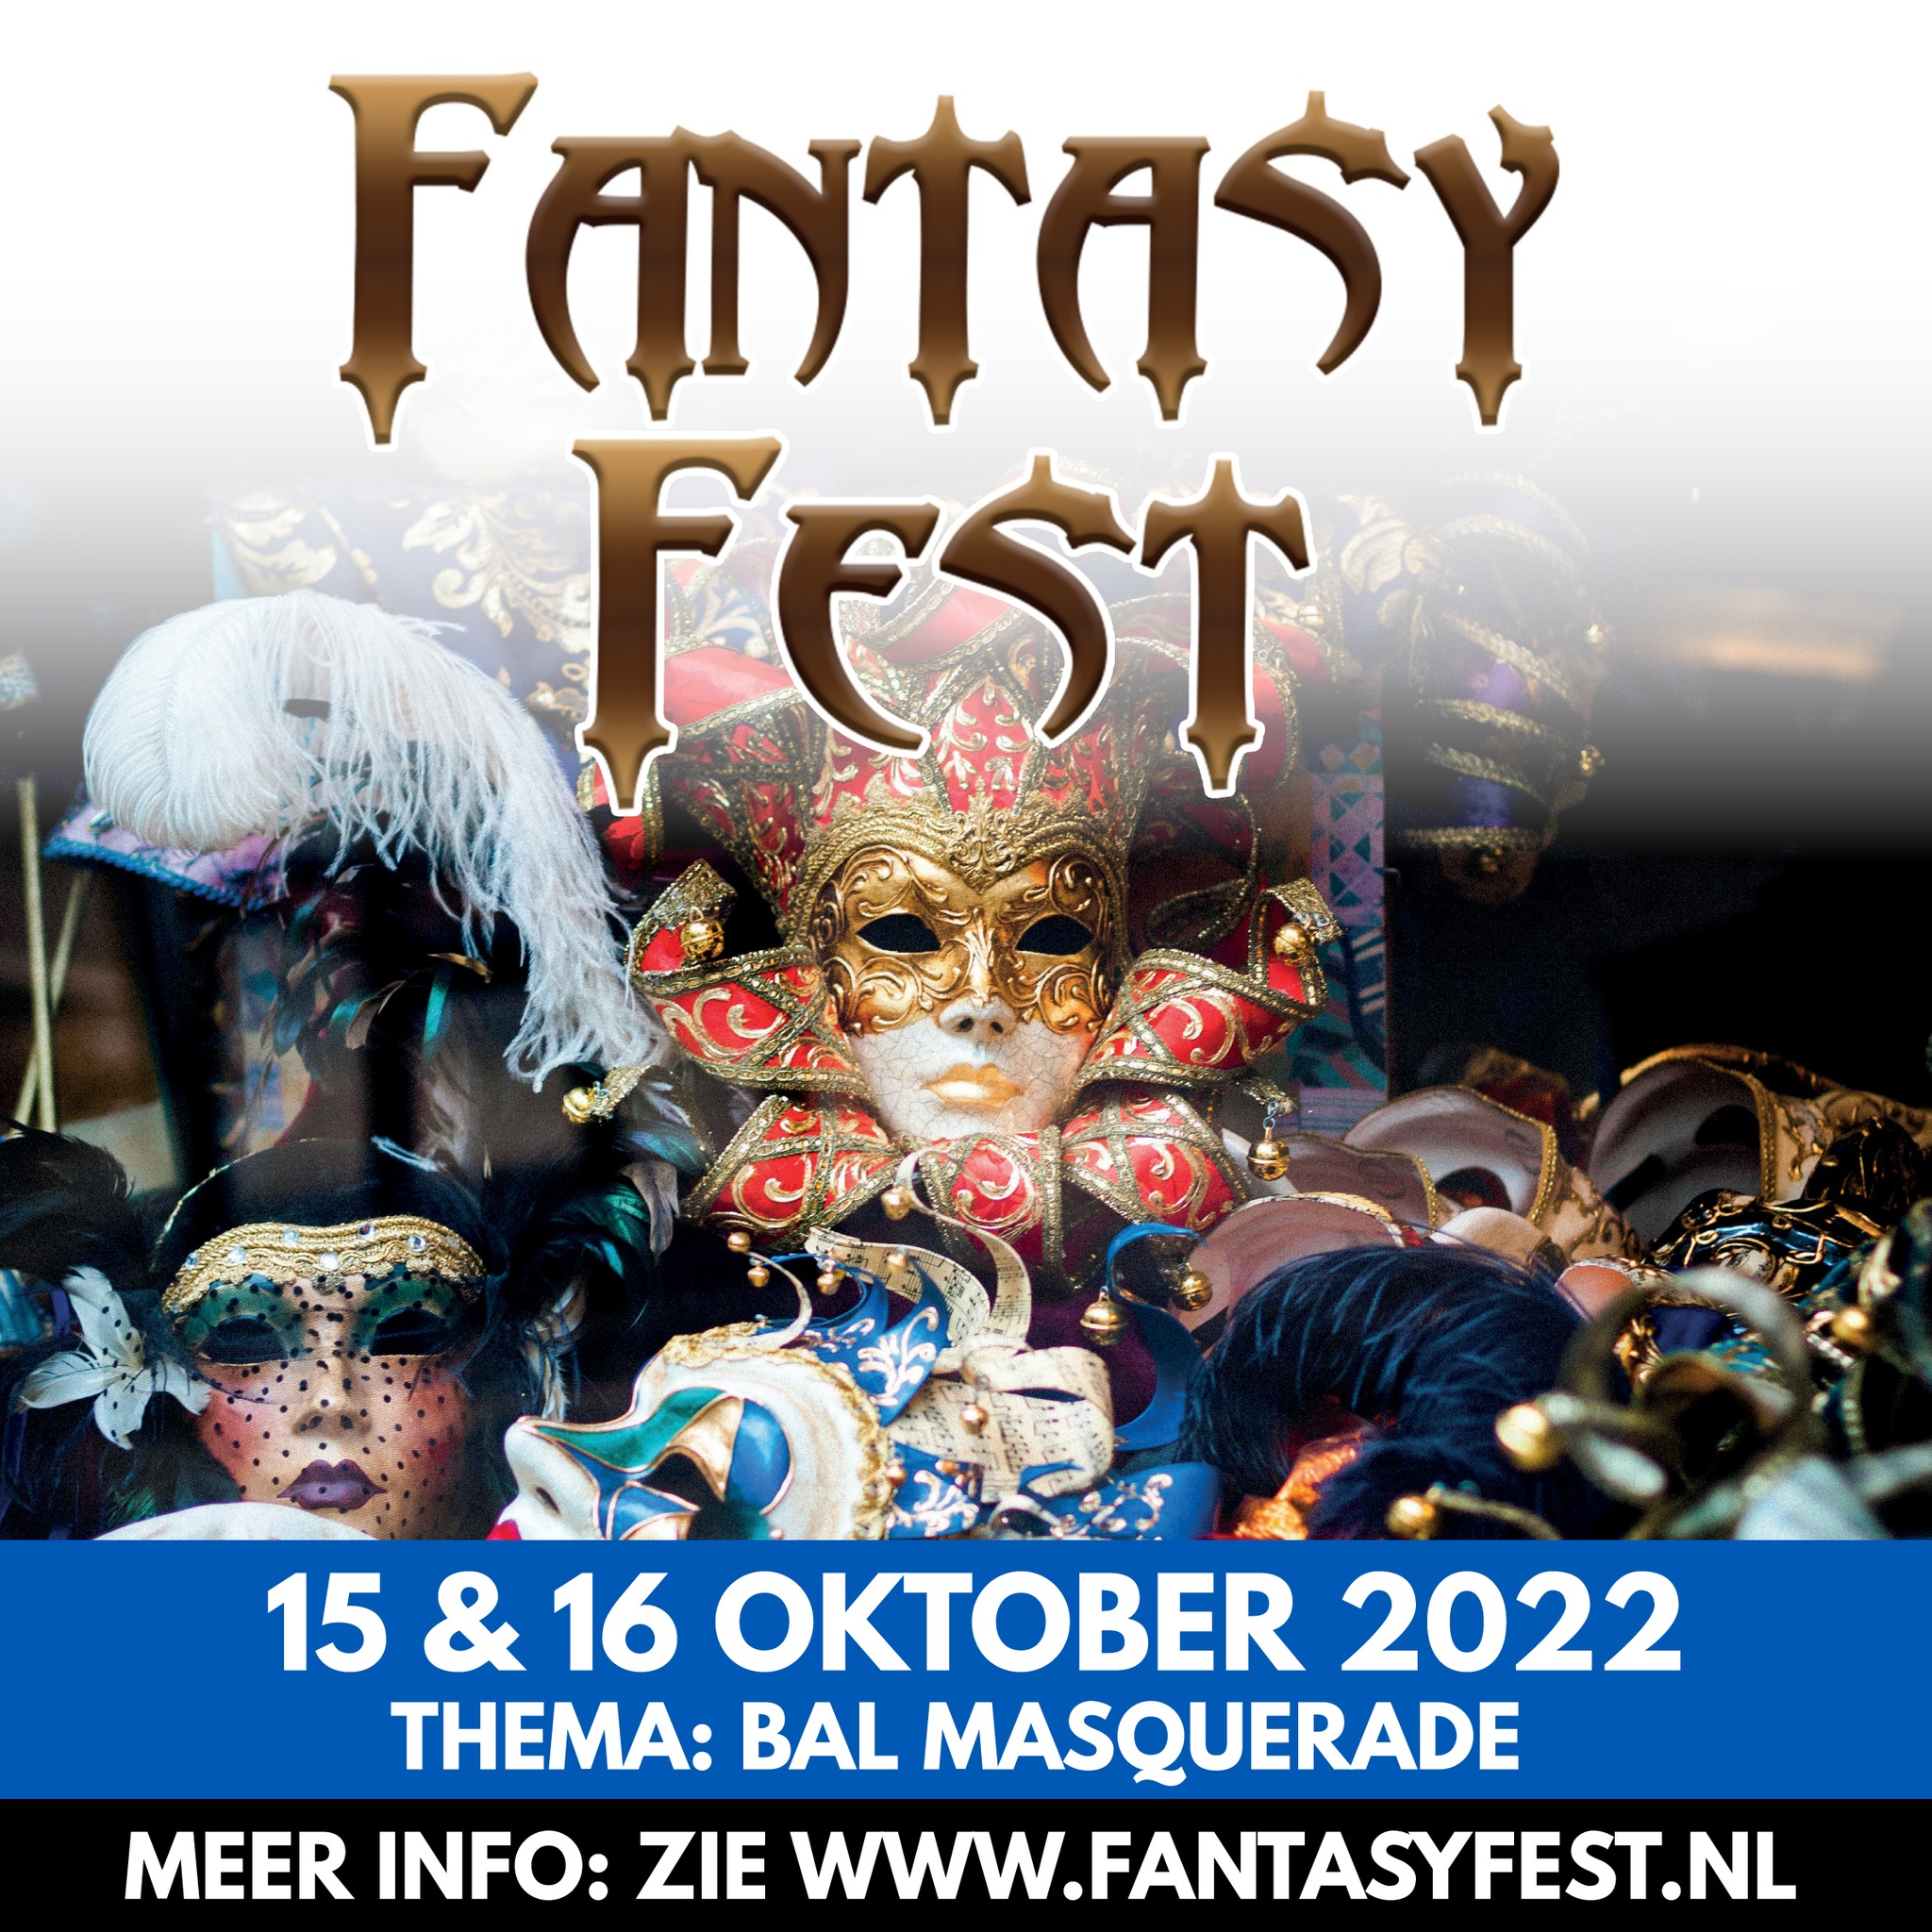 Fantasy Fest Rijswijk 15 & 16 October - Theme: Masquerade Ball